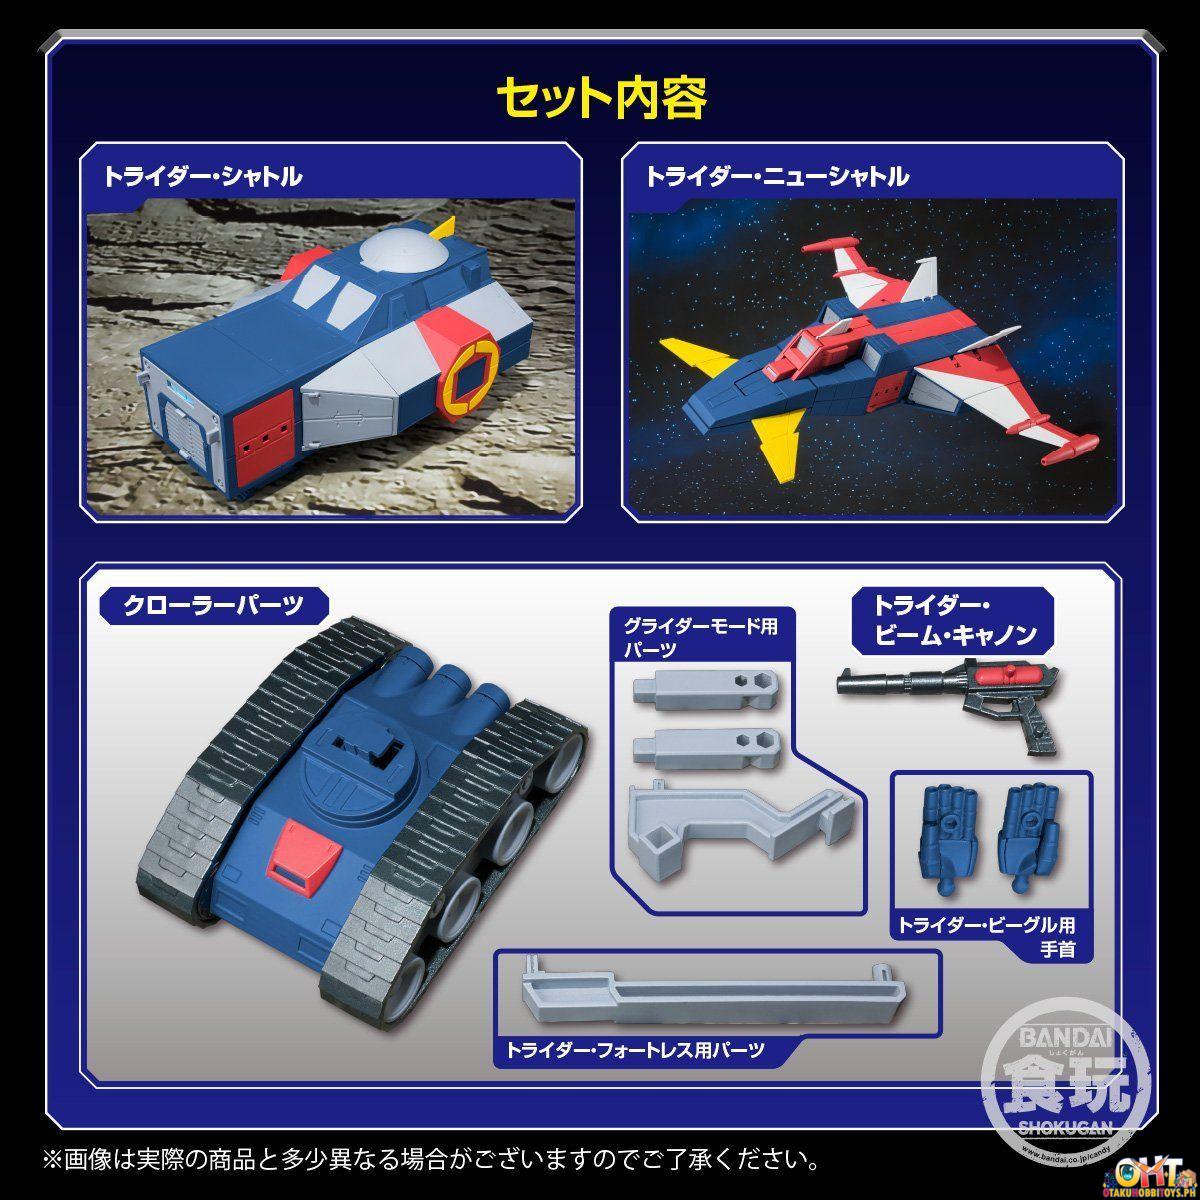 Super Minipla Invincible Robo Trider G7 Shuttle & New Shuttle Set